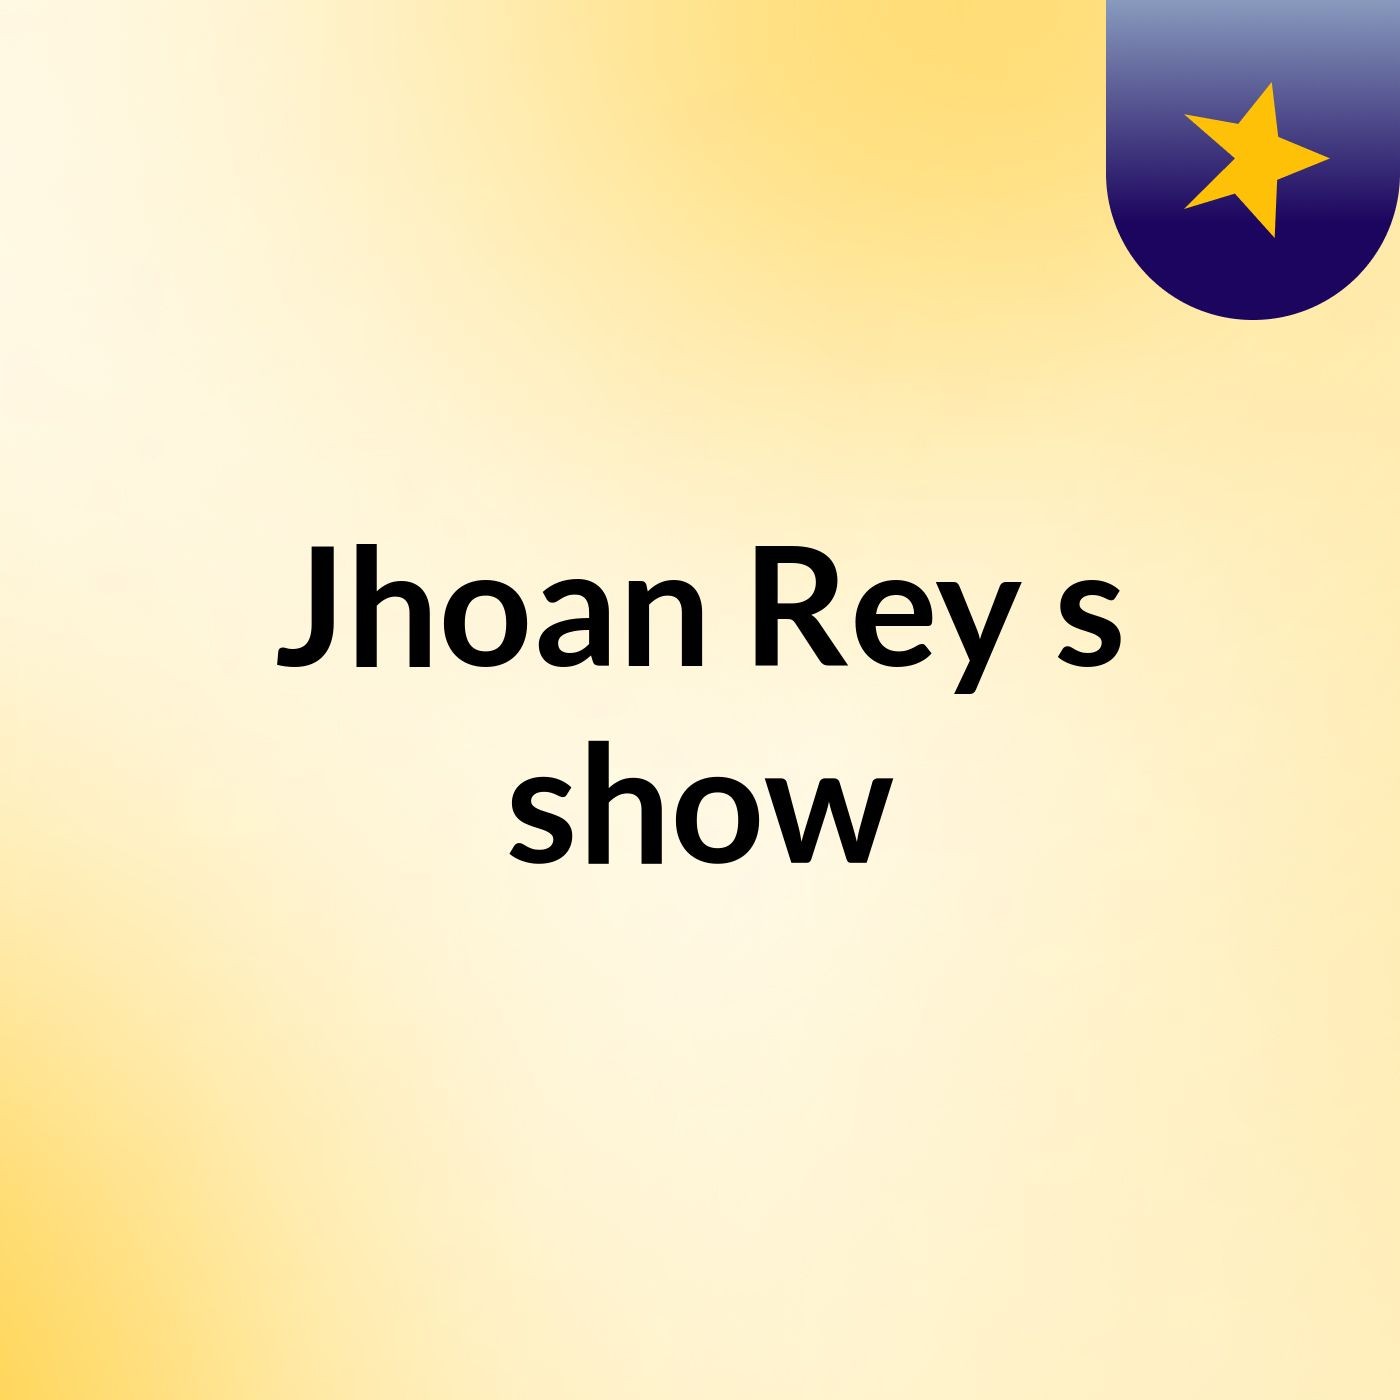 Jhoan Rey's show